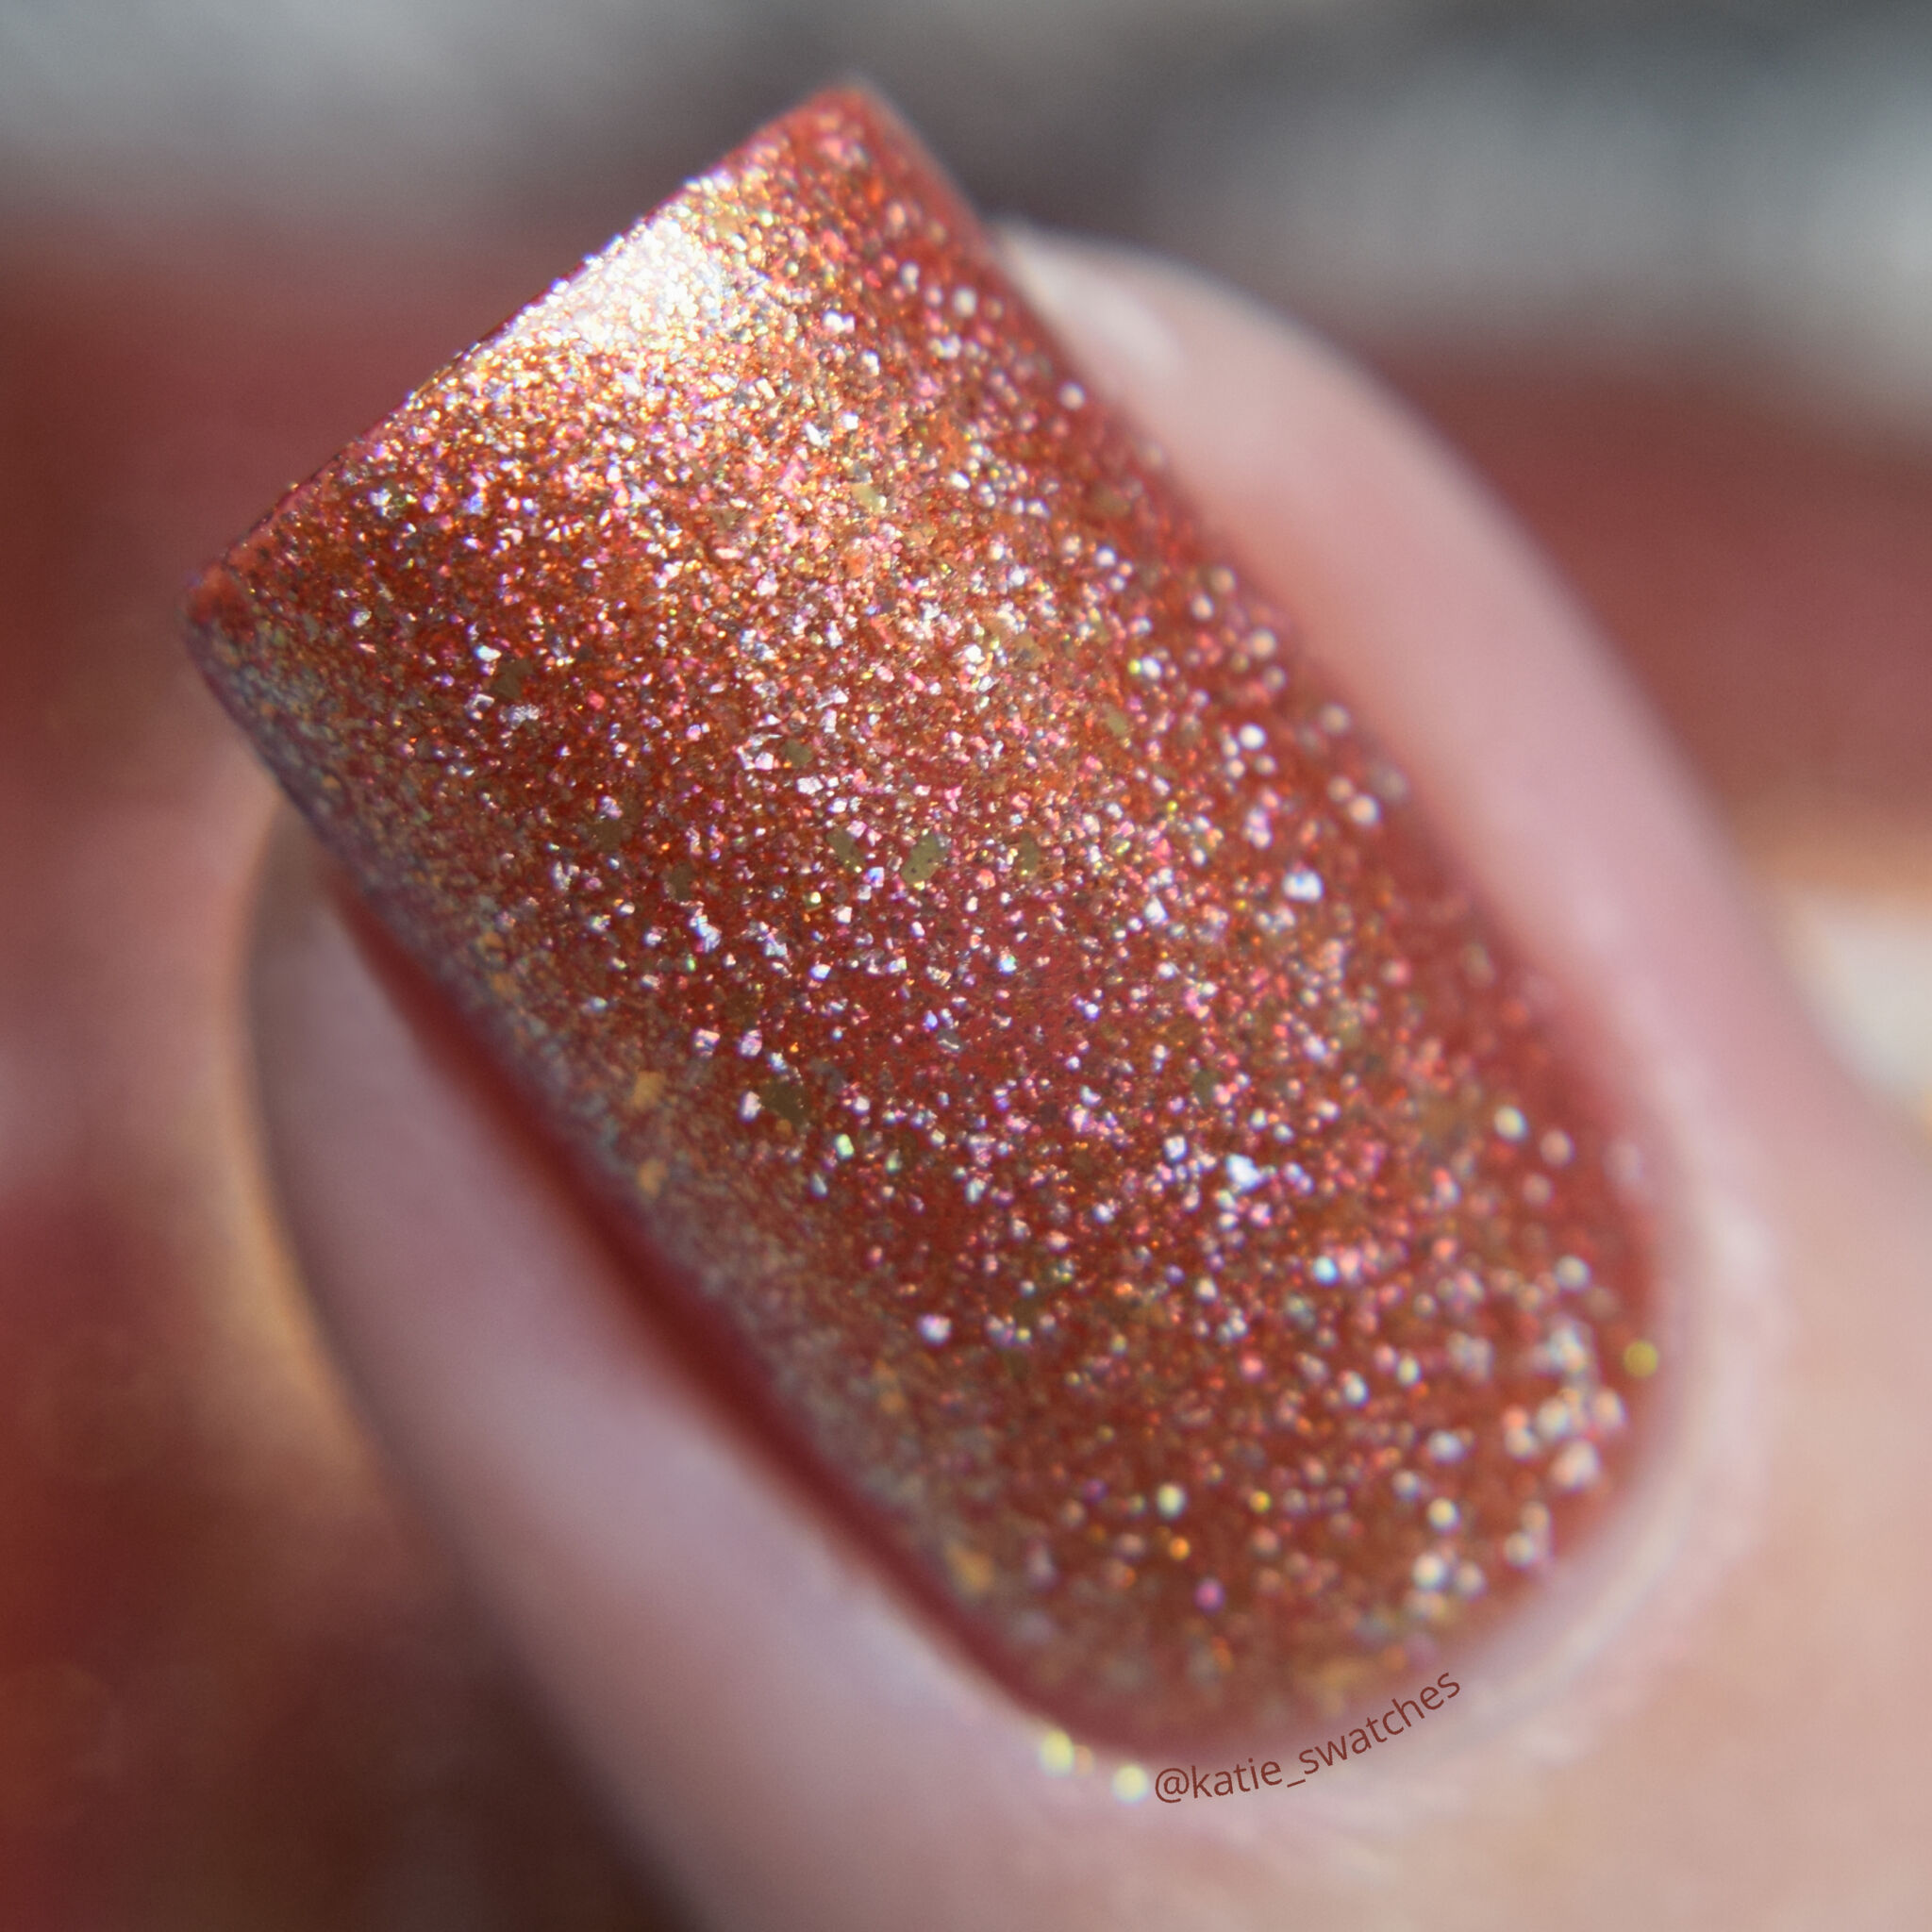 Girly Bits - Brown Sugar holographic nail polish swatch macro - indie nail polish - small batch release